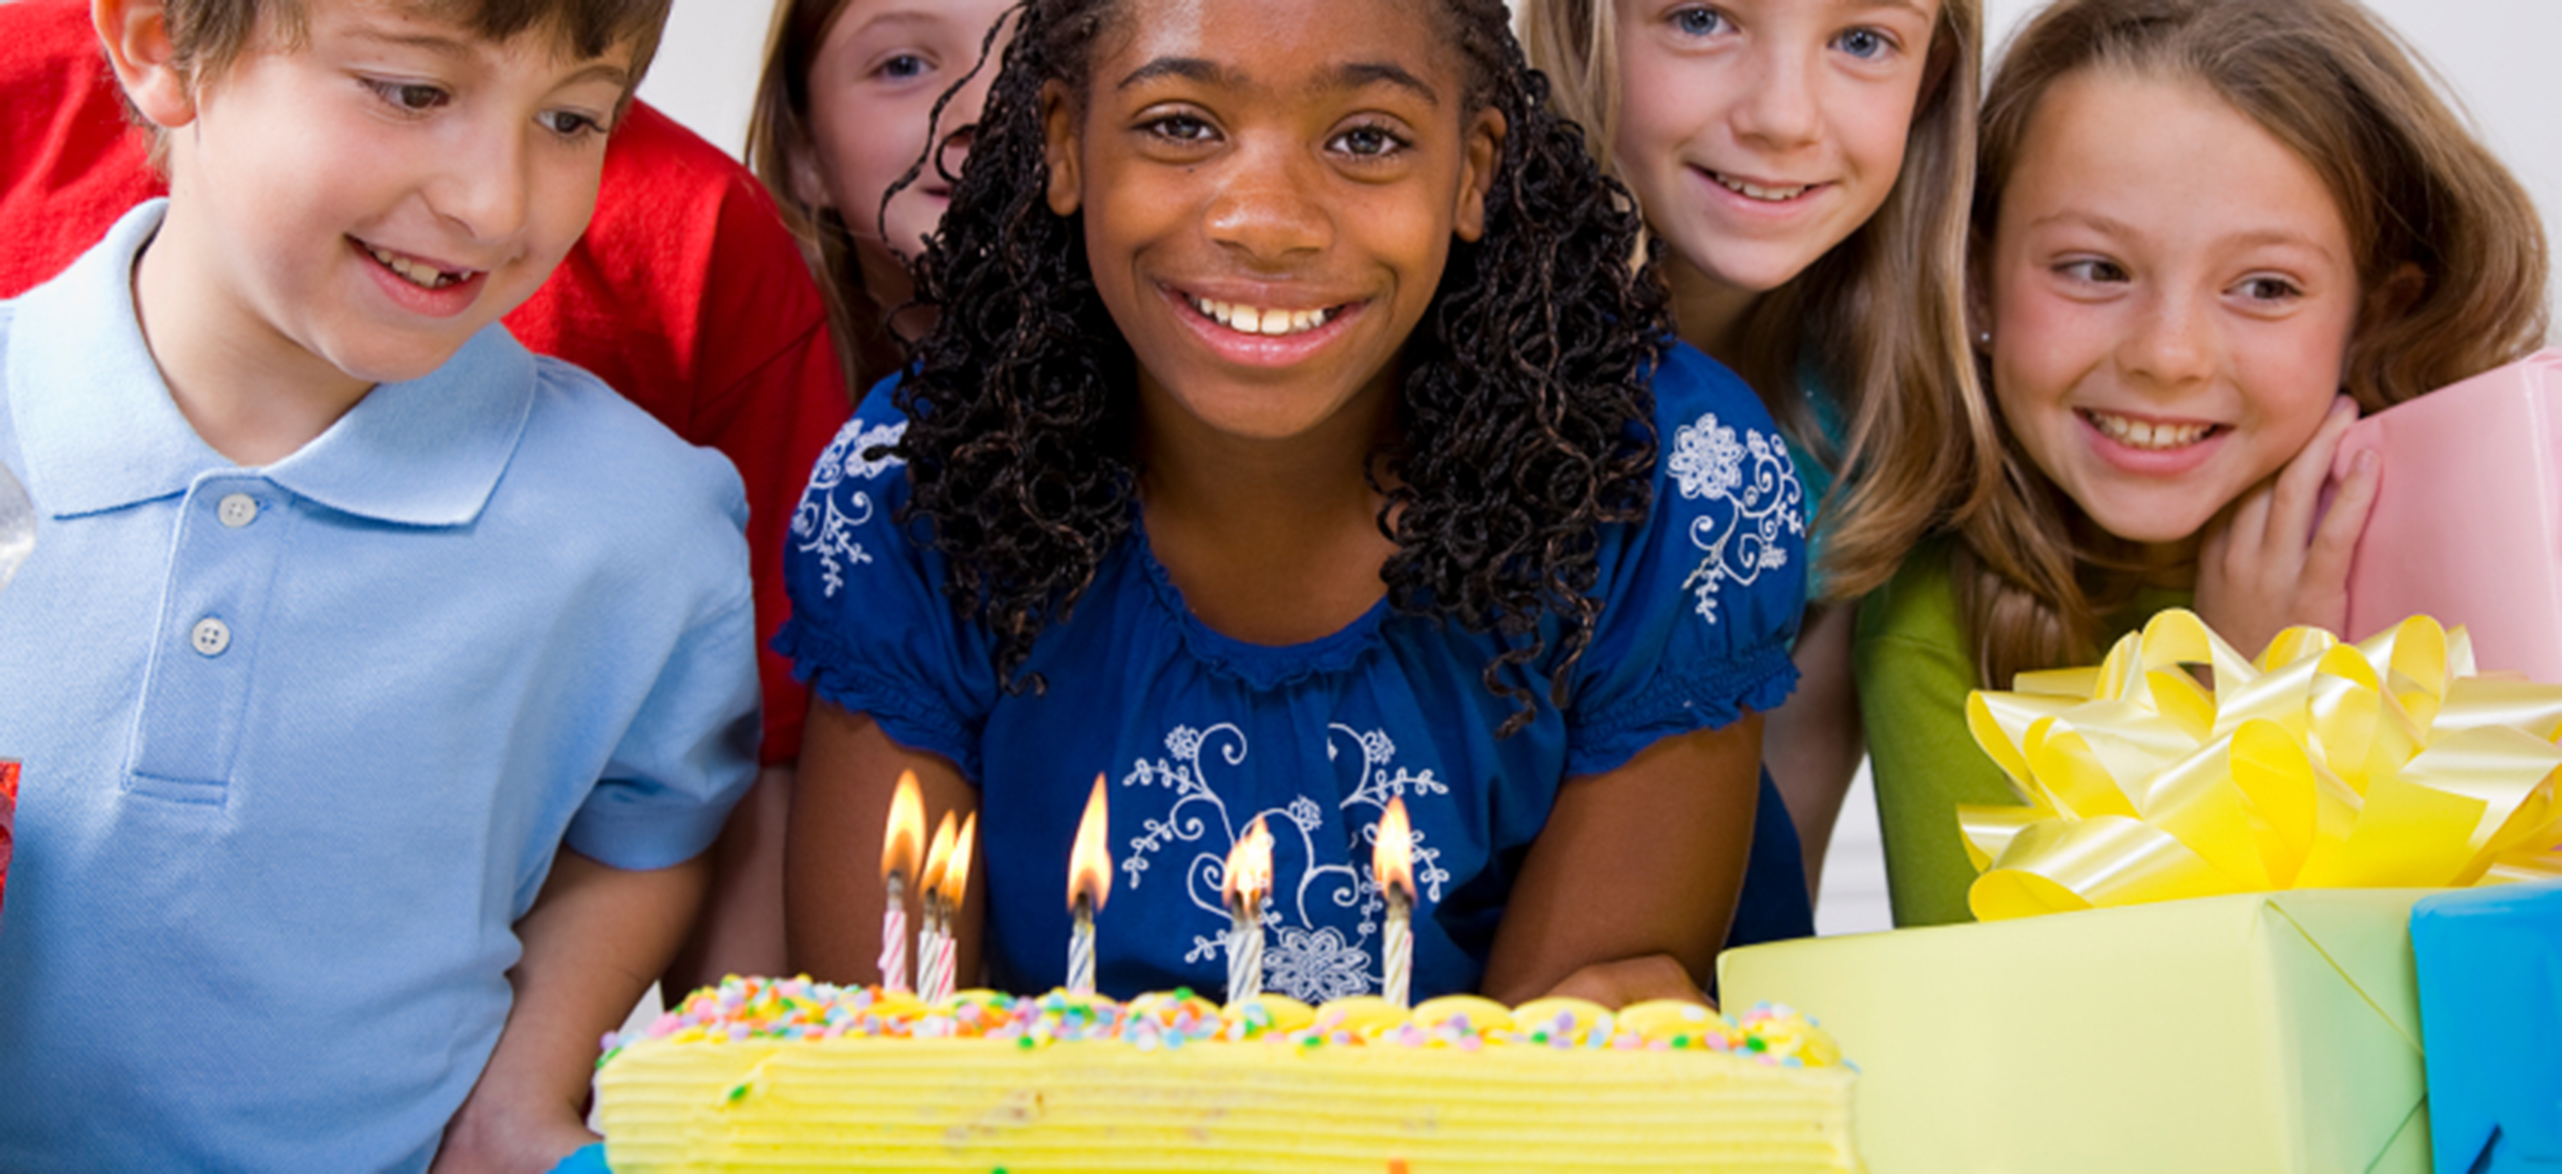 <a style="color:#fff;" href="https://adventureplex.campbrainregistration.com/">We specialize in kids' birthday parties!</a>